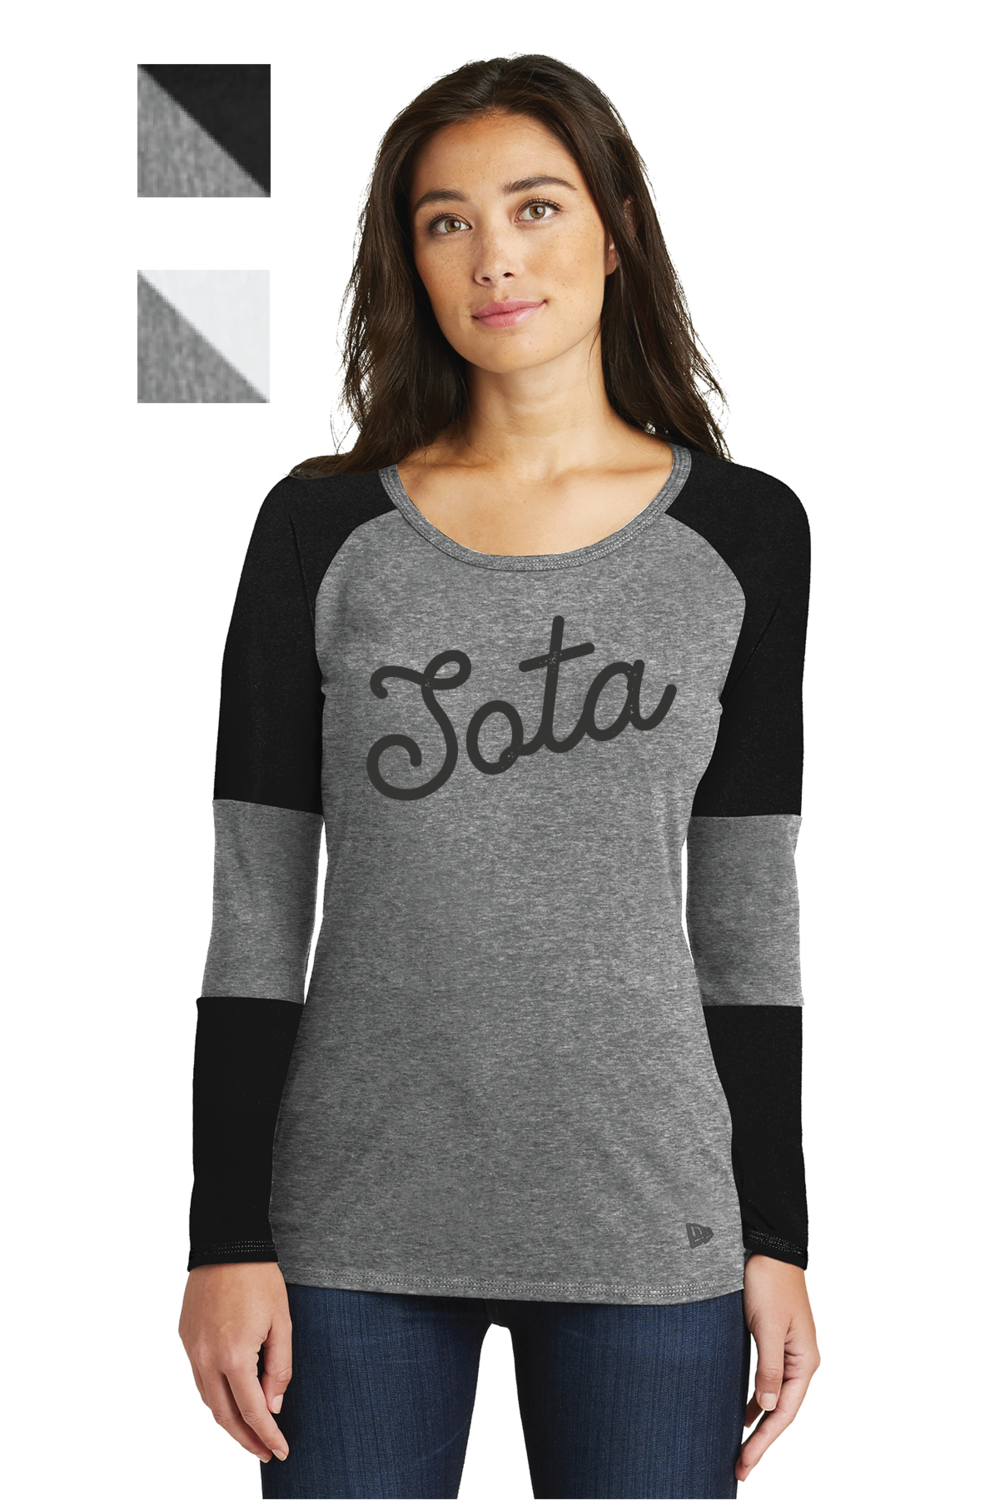 Sota Design Printed on New Era® Ladies Tri-Blend Performance Baseball Tee